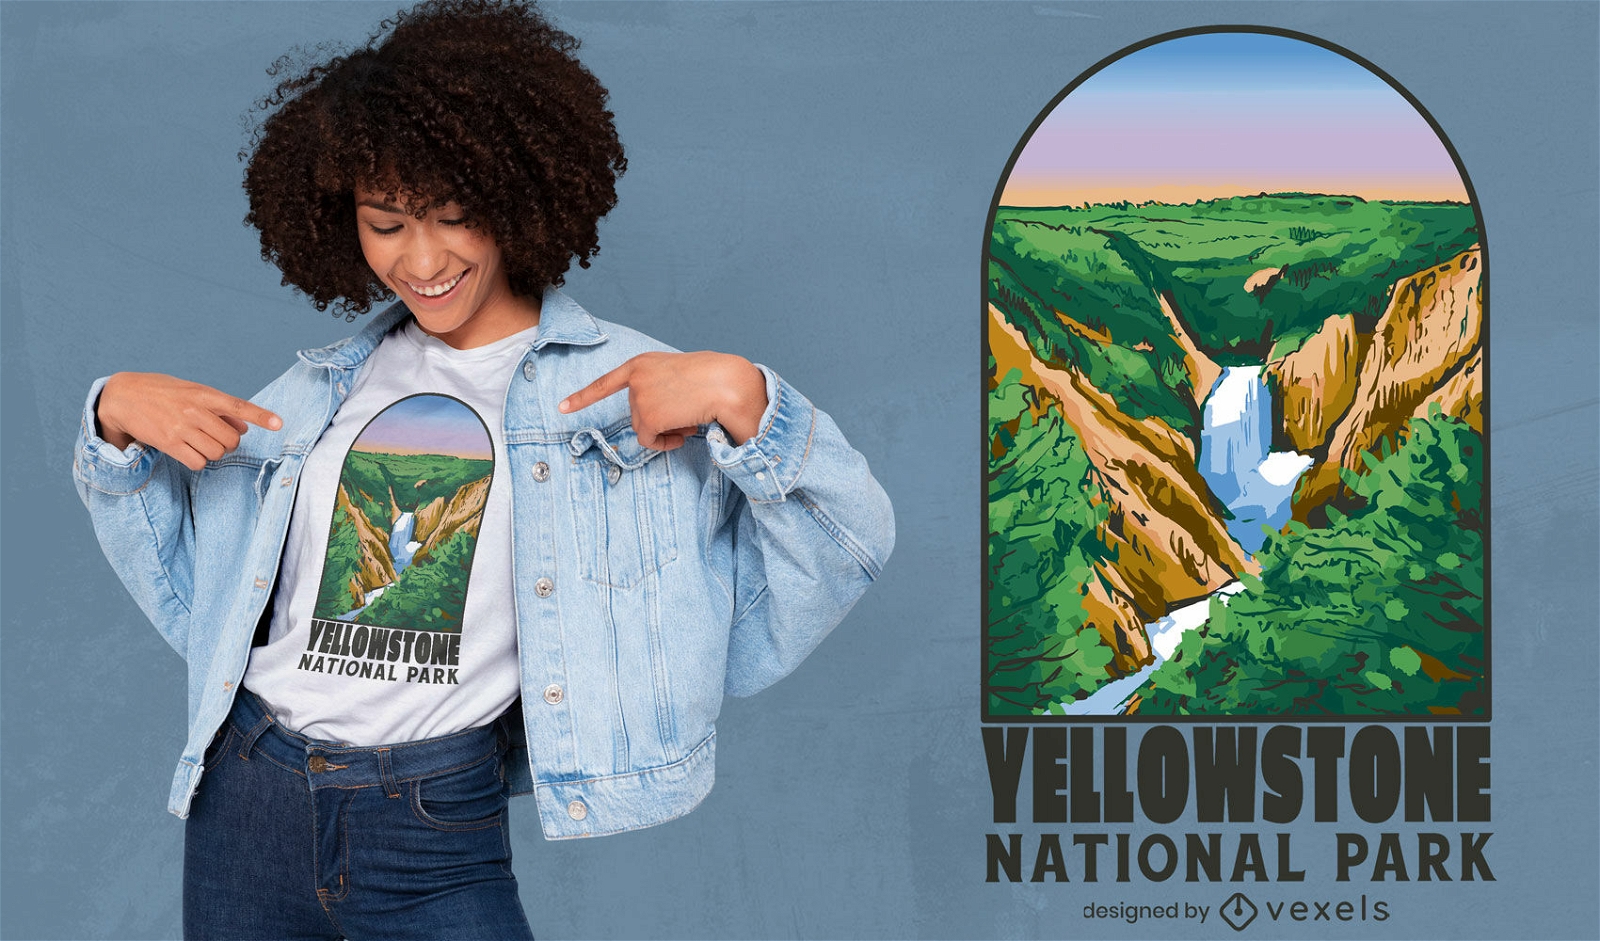 Yellowstone national park usa t-shirt design